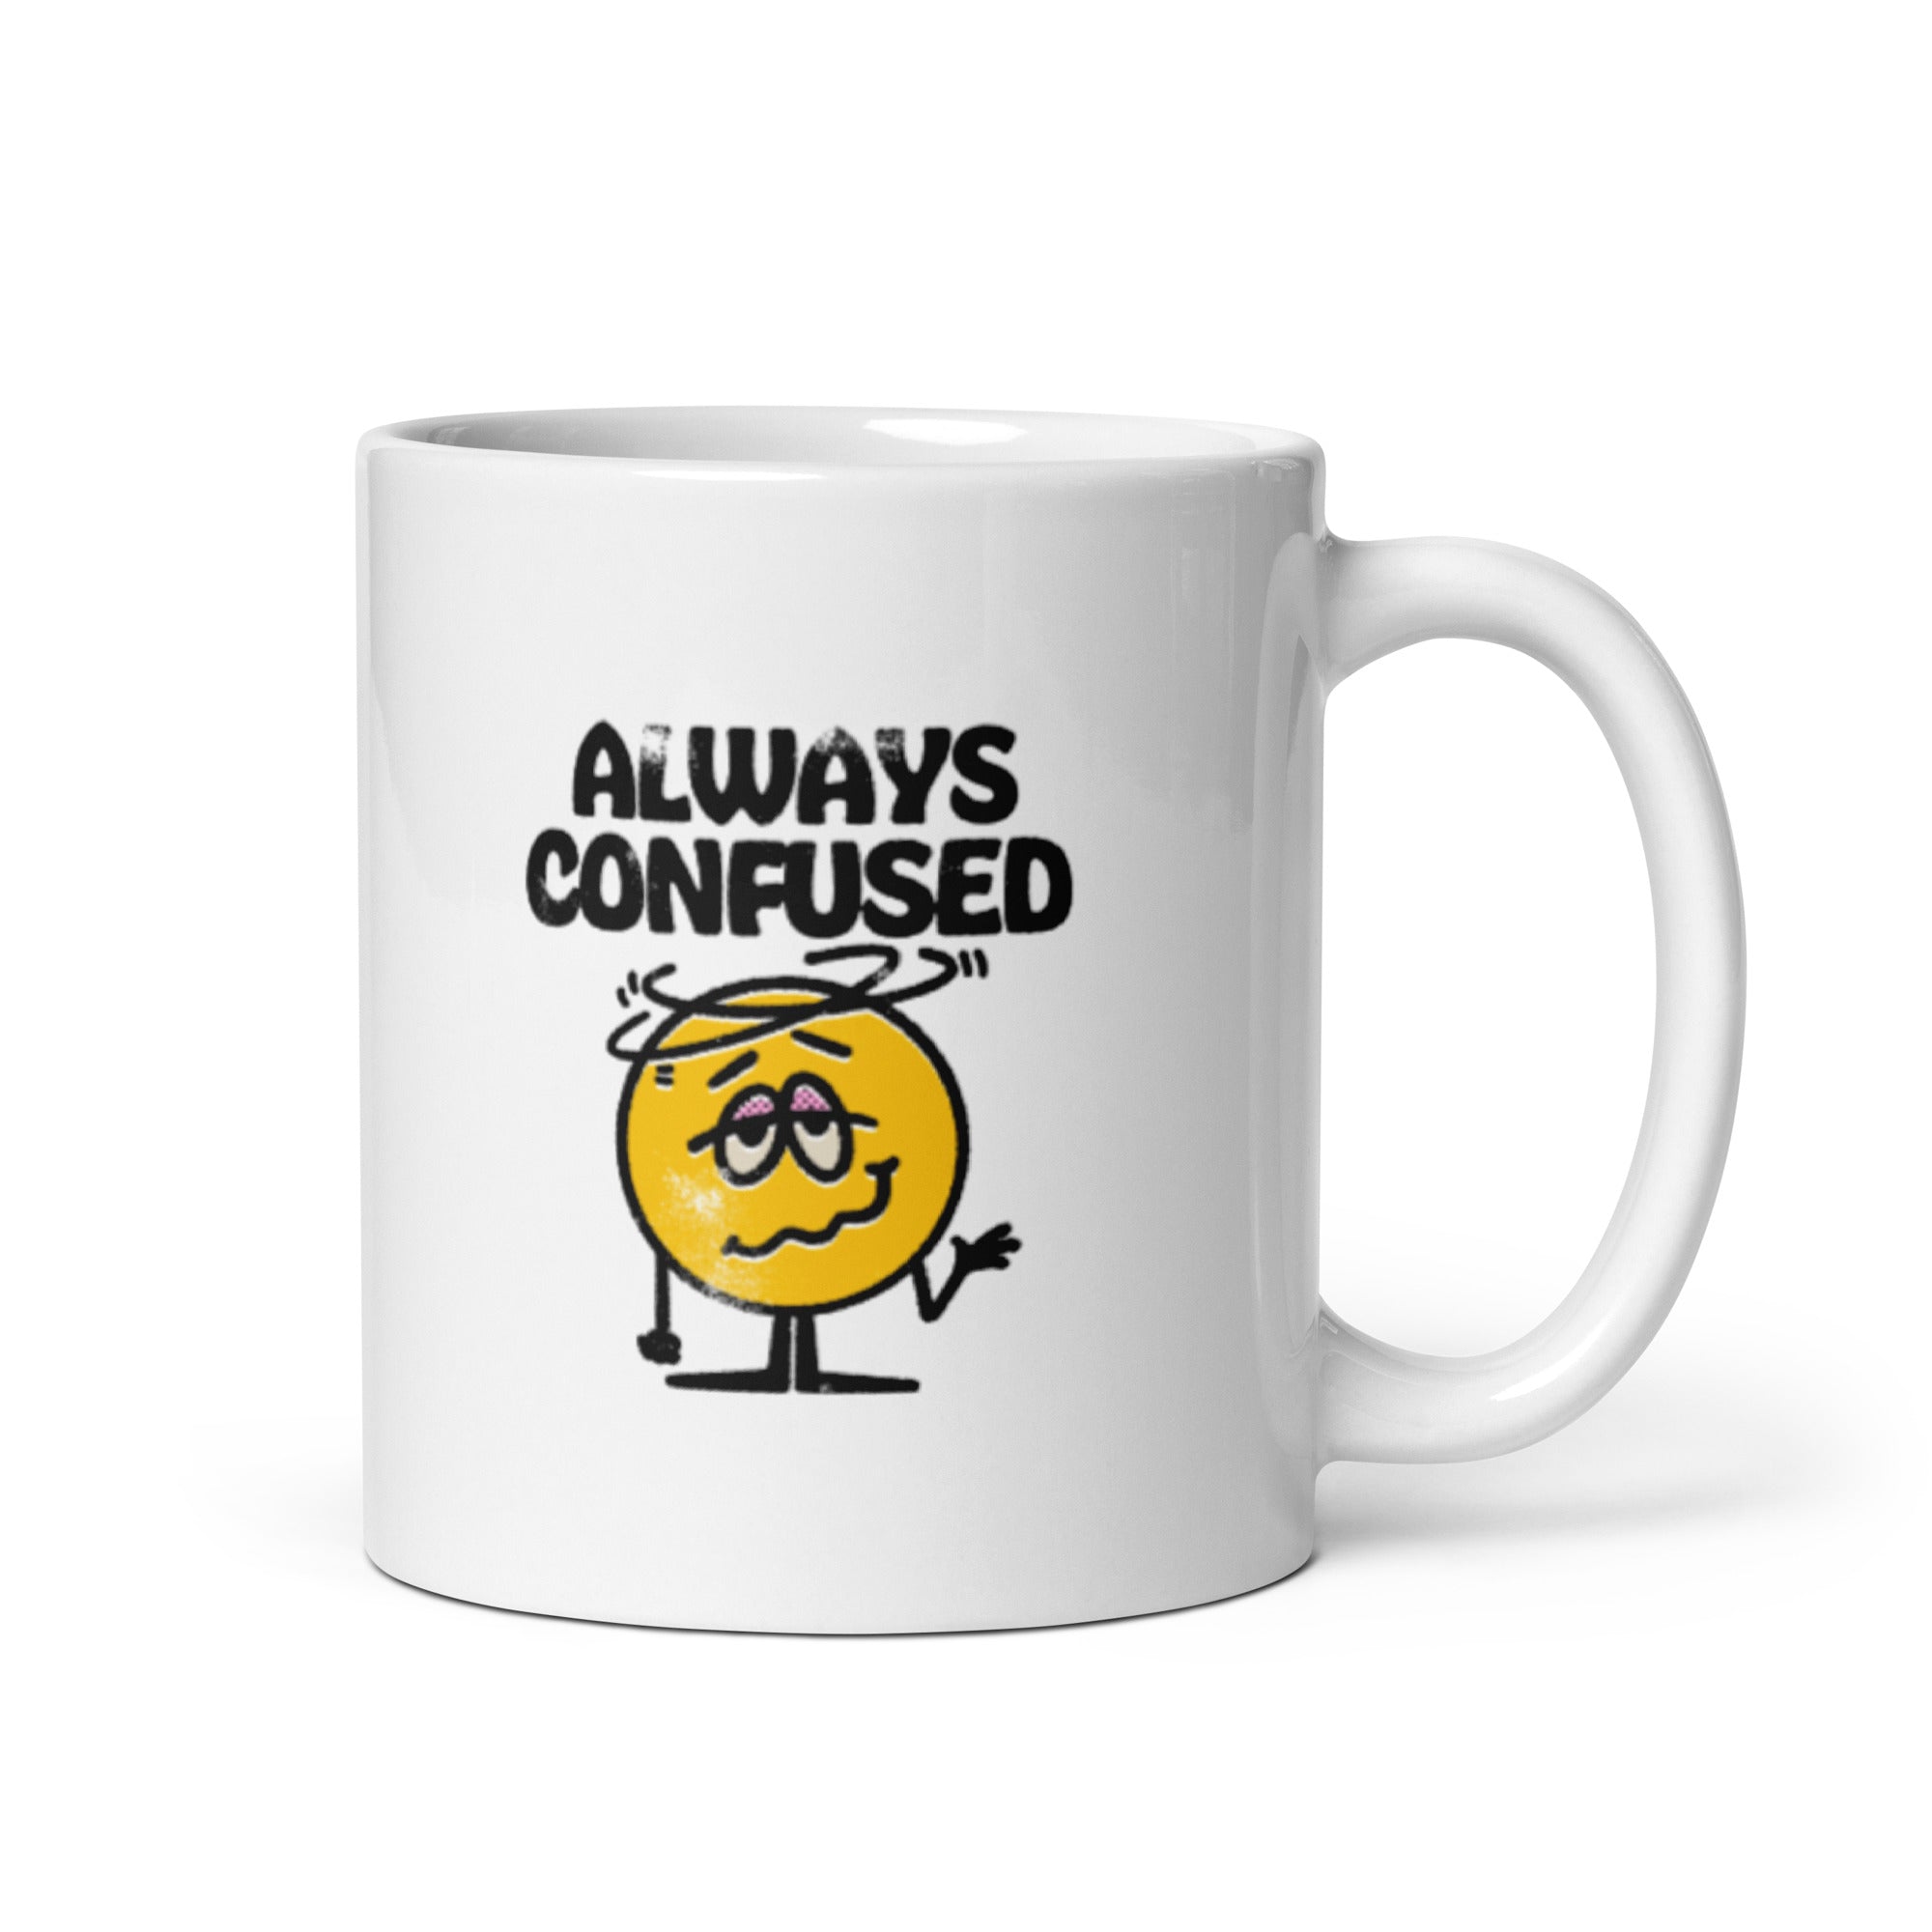 Always Confused - White glossy mug